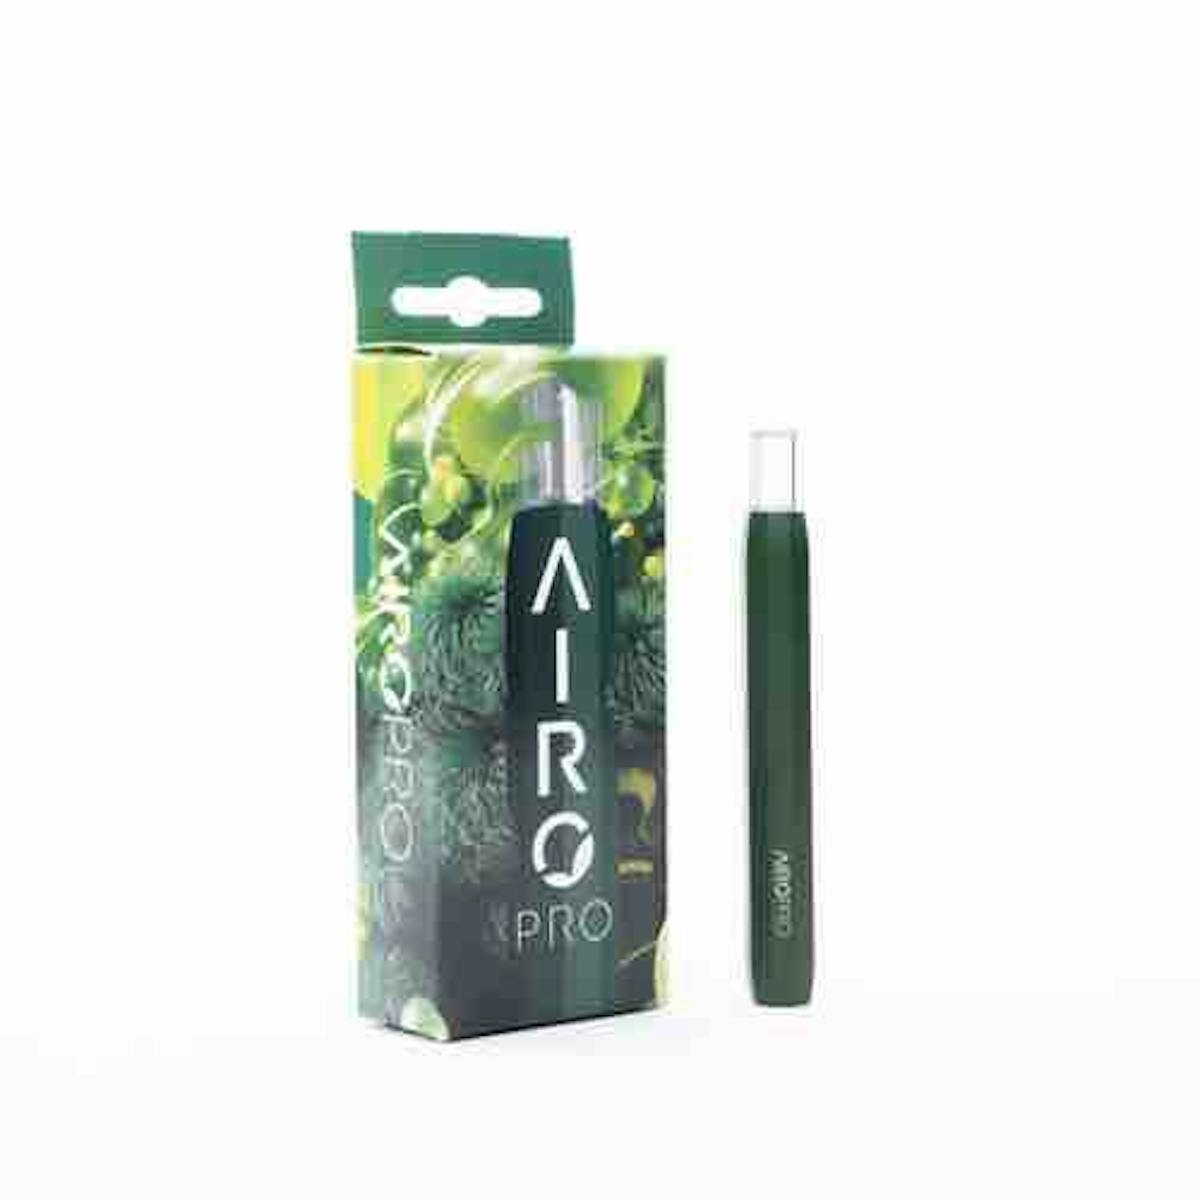 image of Airo Pro Vaporizer - Emerald Green